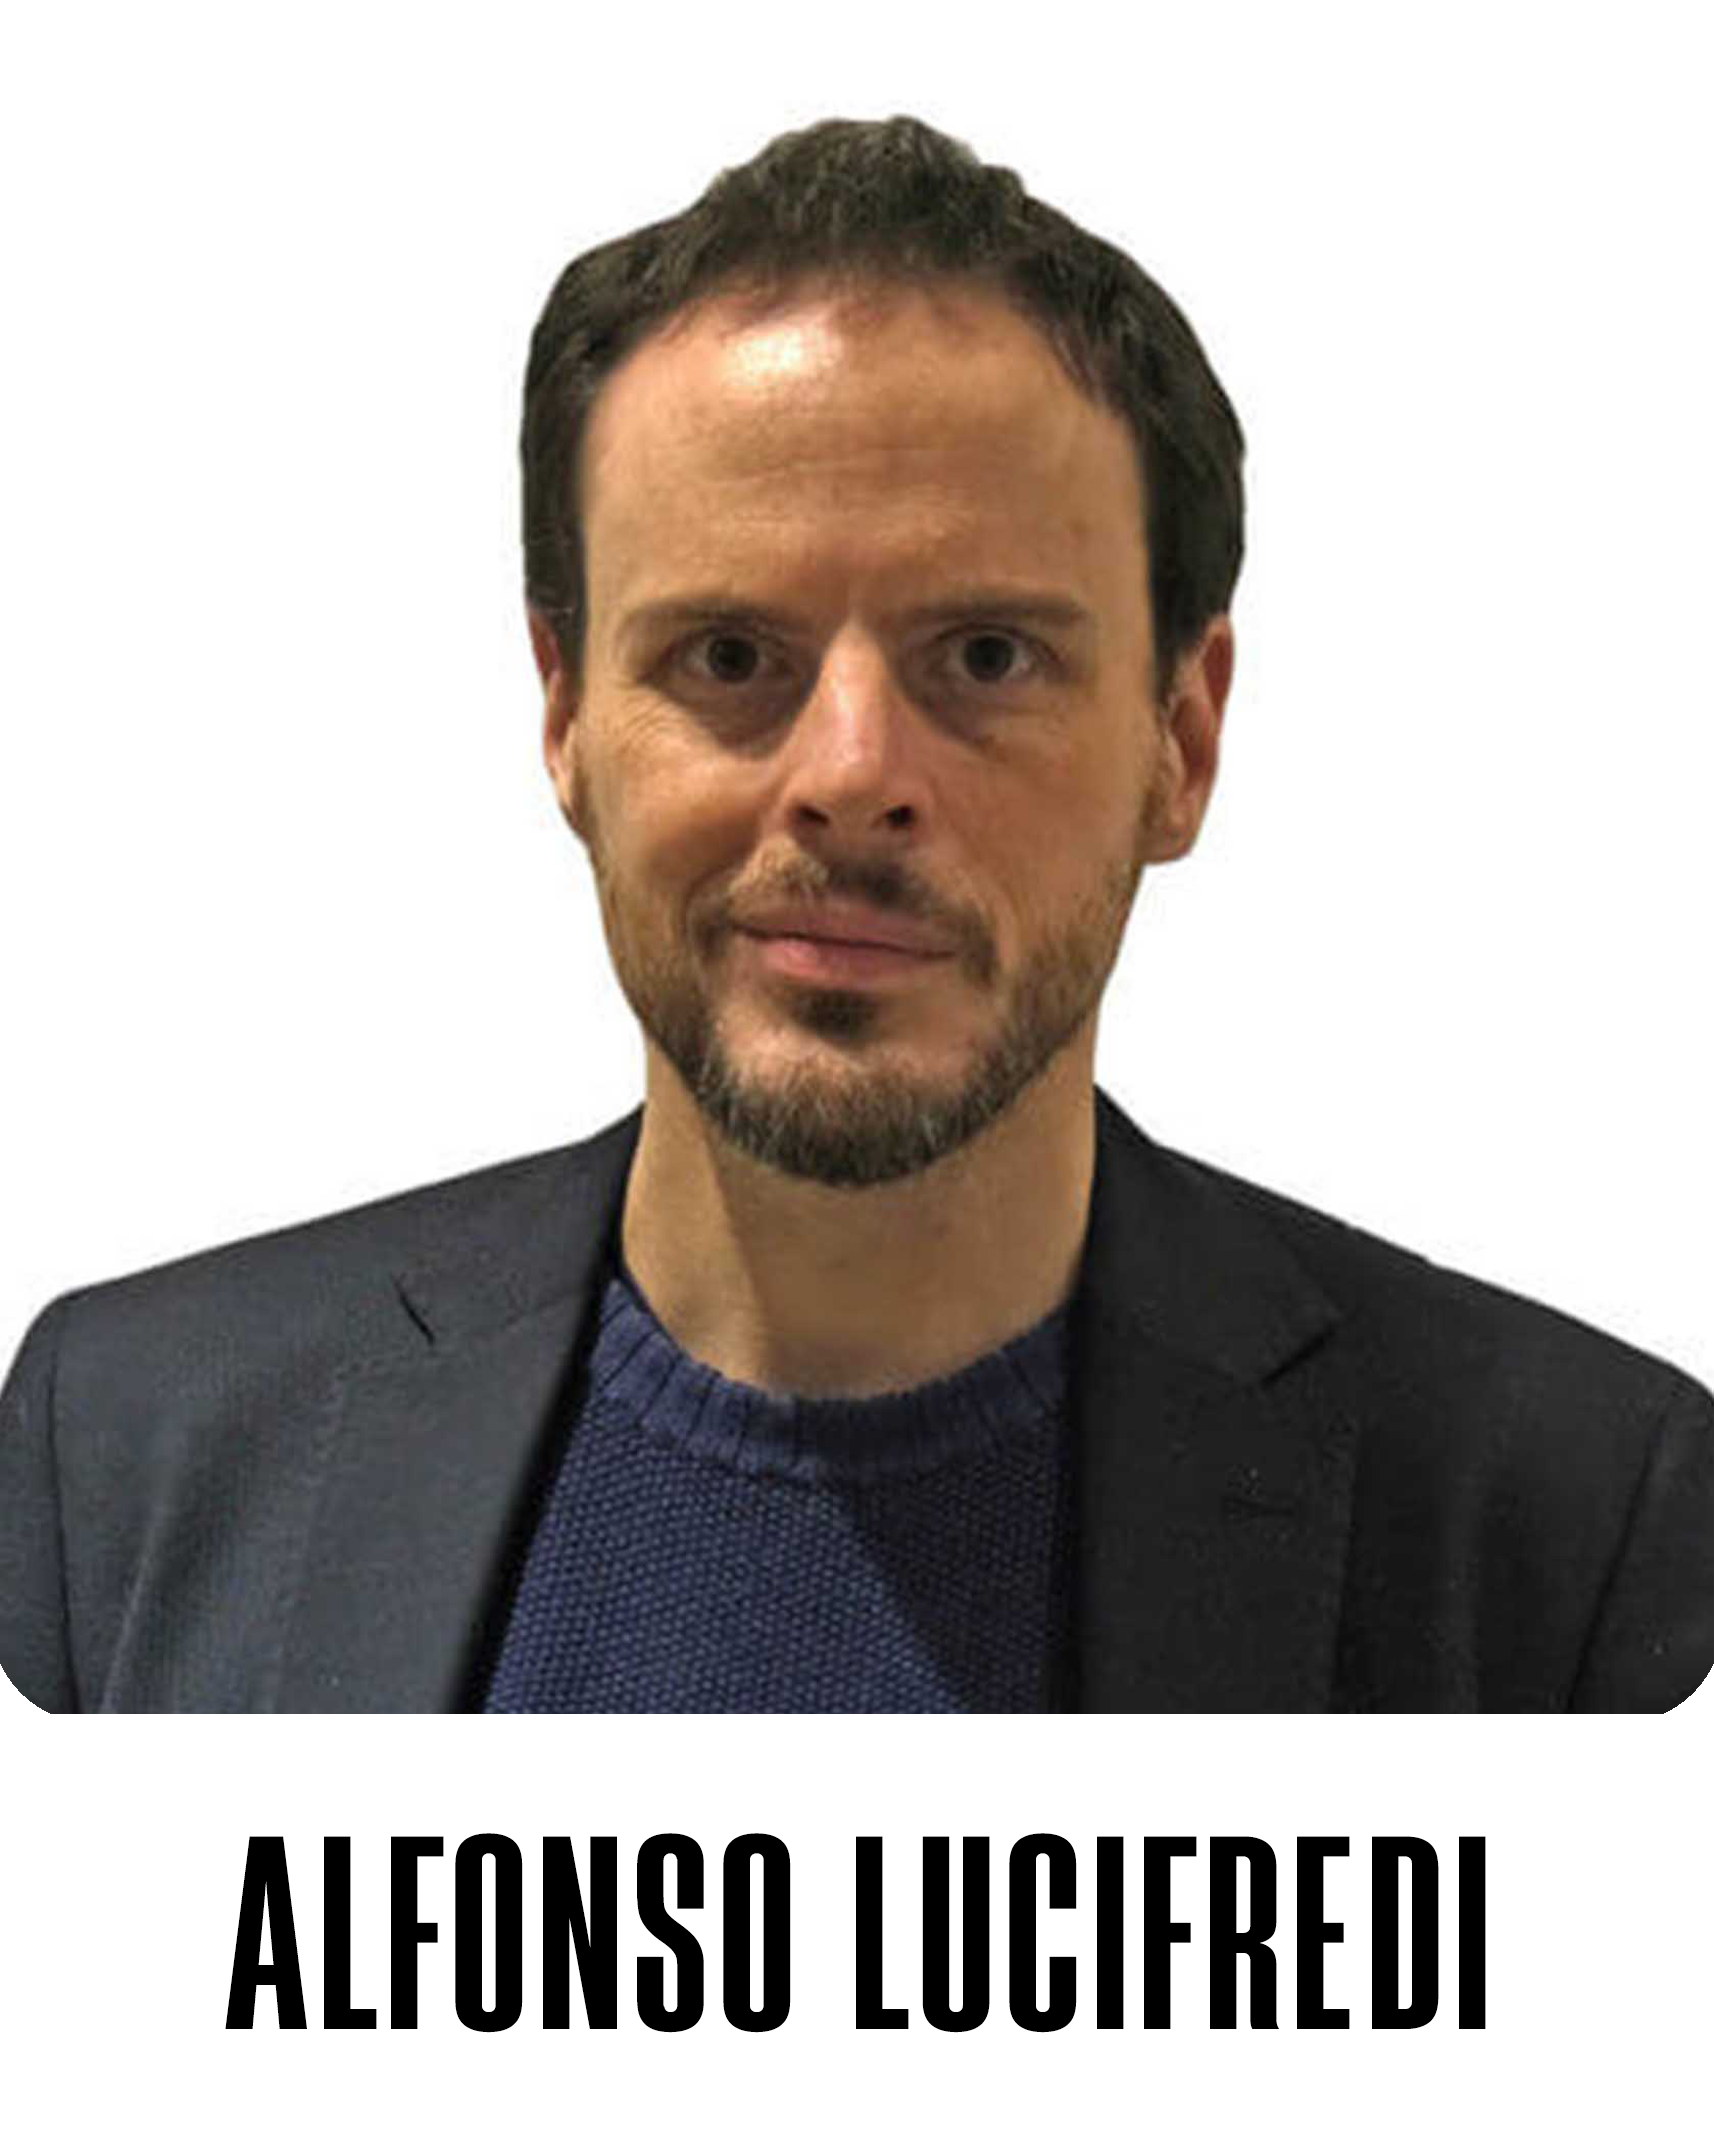 Alfonso Lucifredi